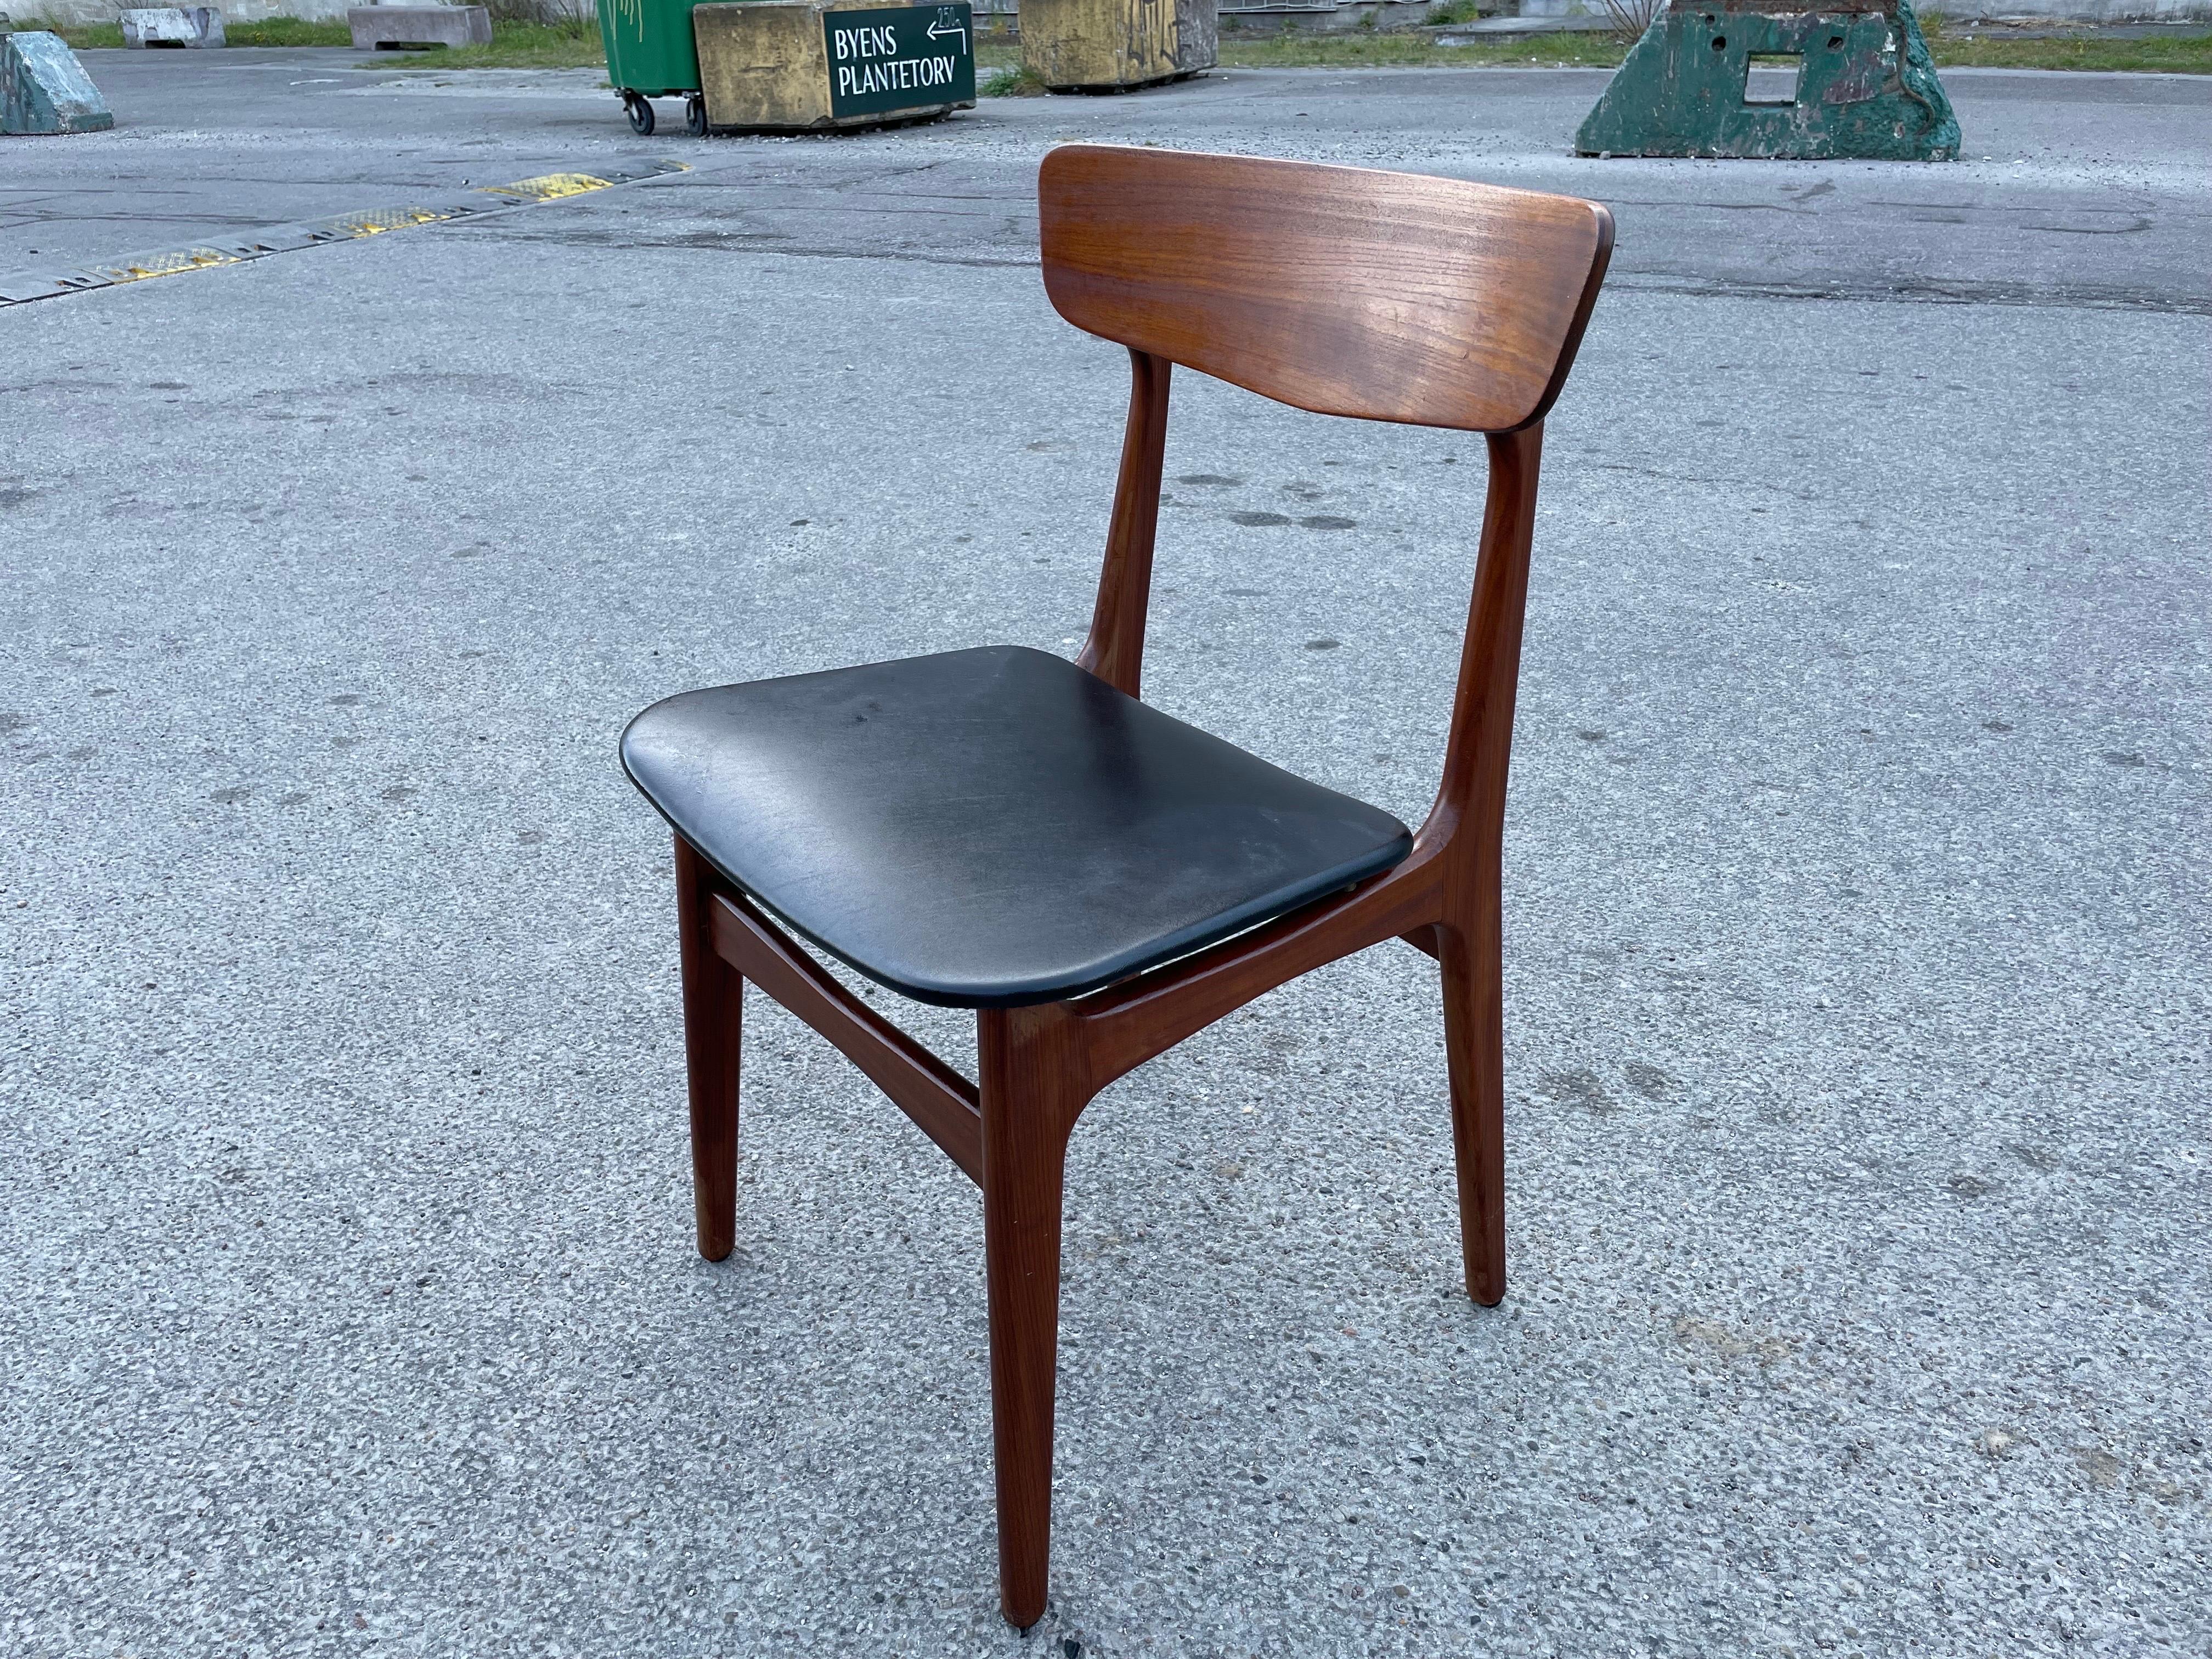 Set of 6 Midcentury Danish Chairs in Teak by Schiønning & Elgaard, 1960s For Sale 7